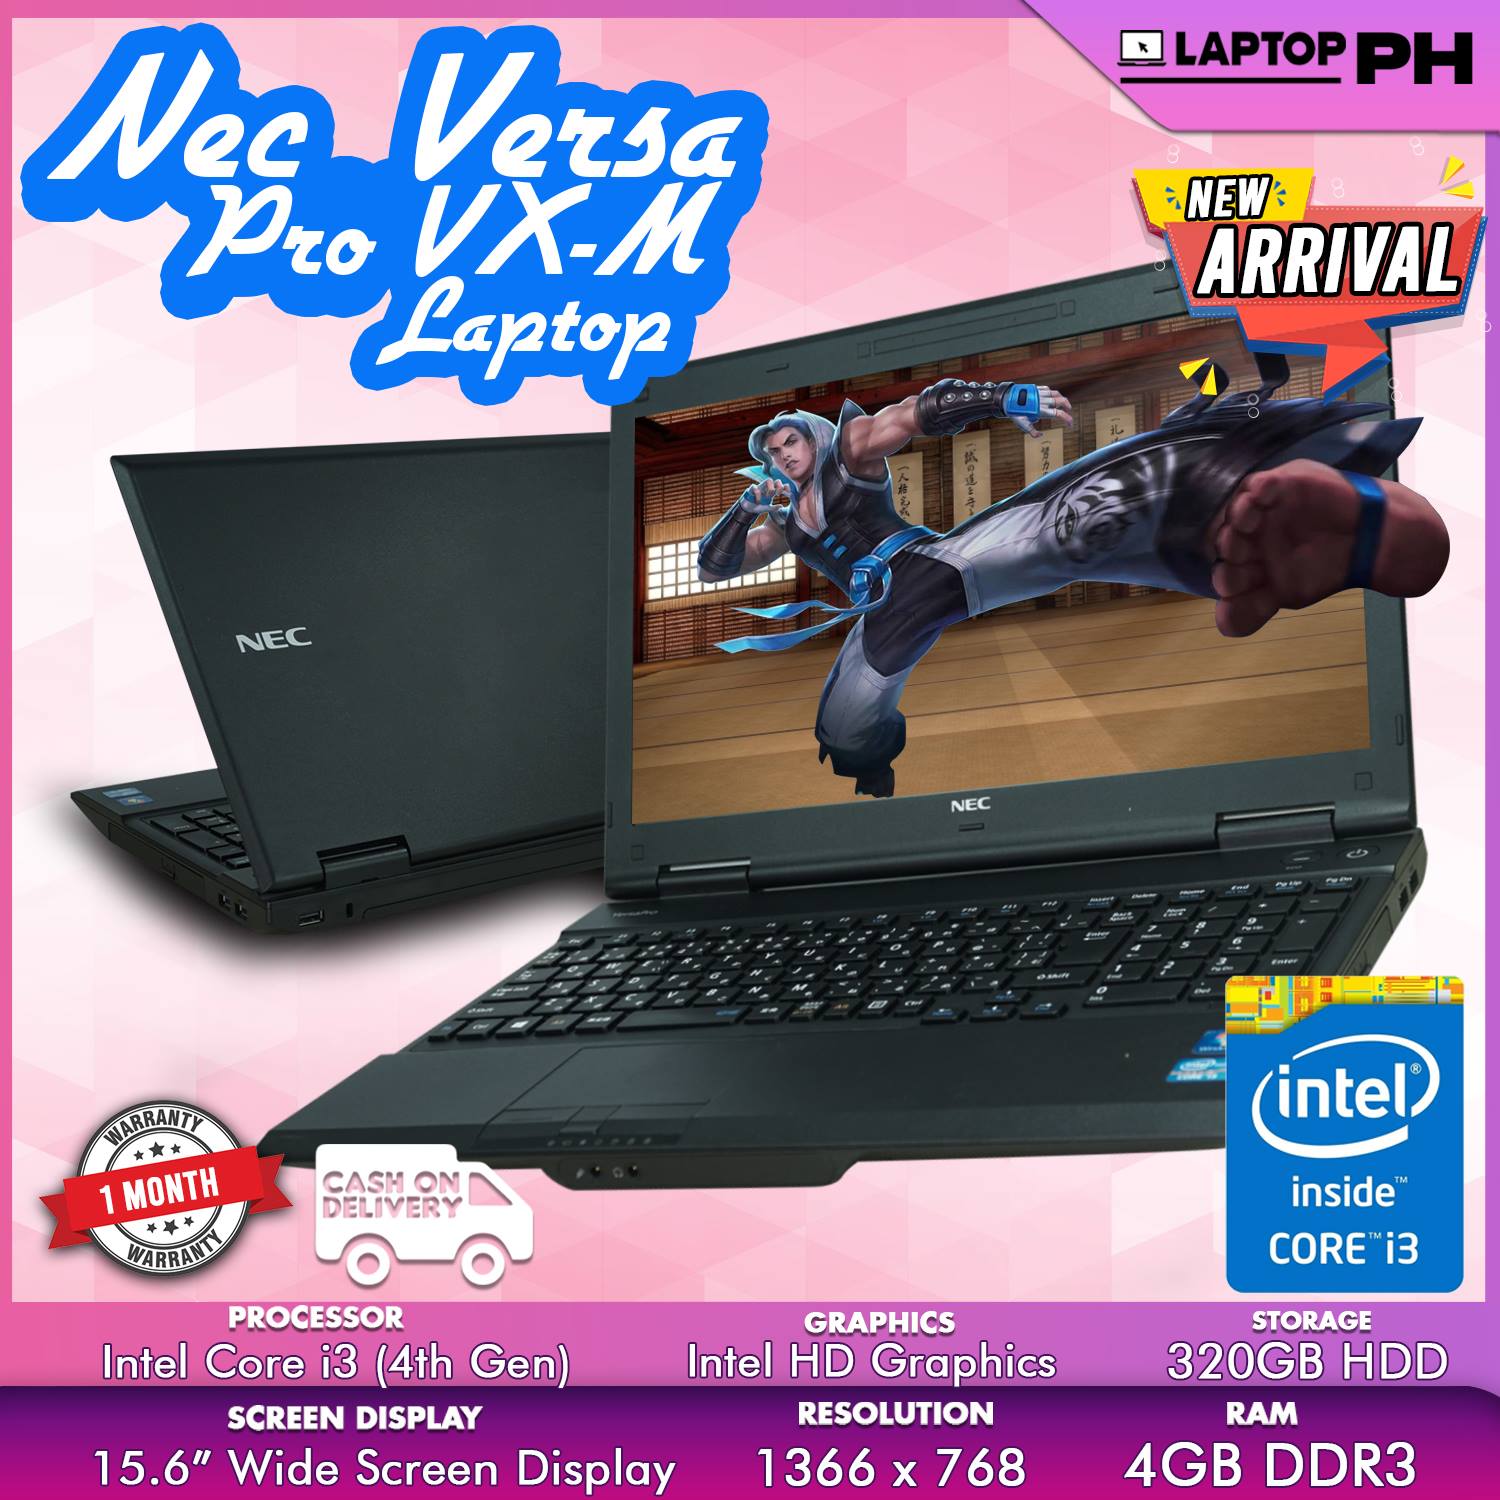 Nec Versapro VX M Laptop   Intel Core i3 m 4GB RAM DDR3 GB